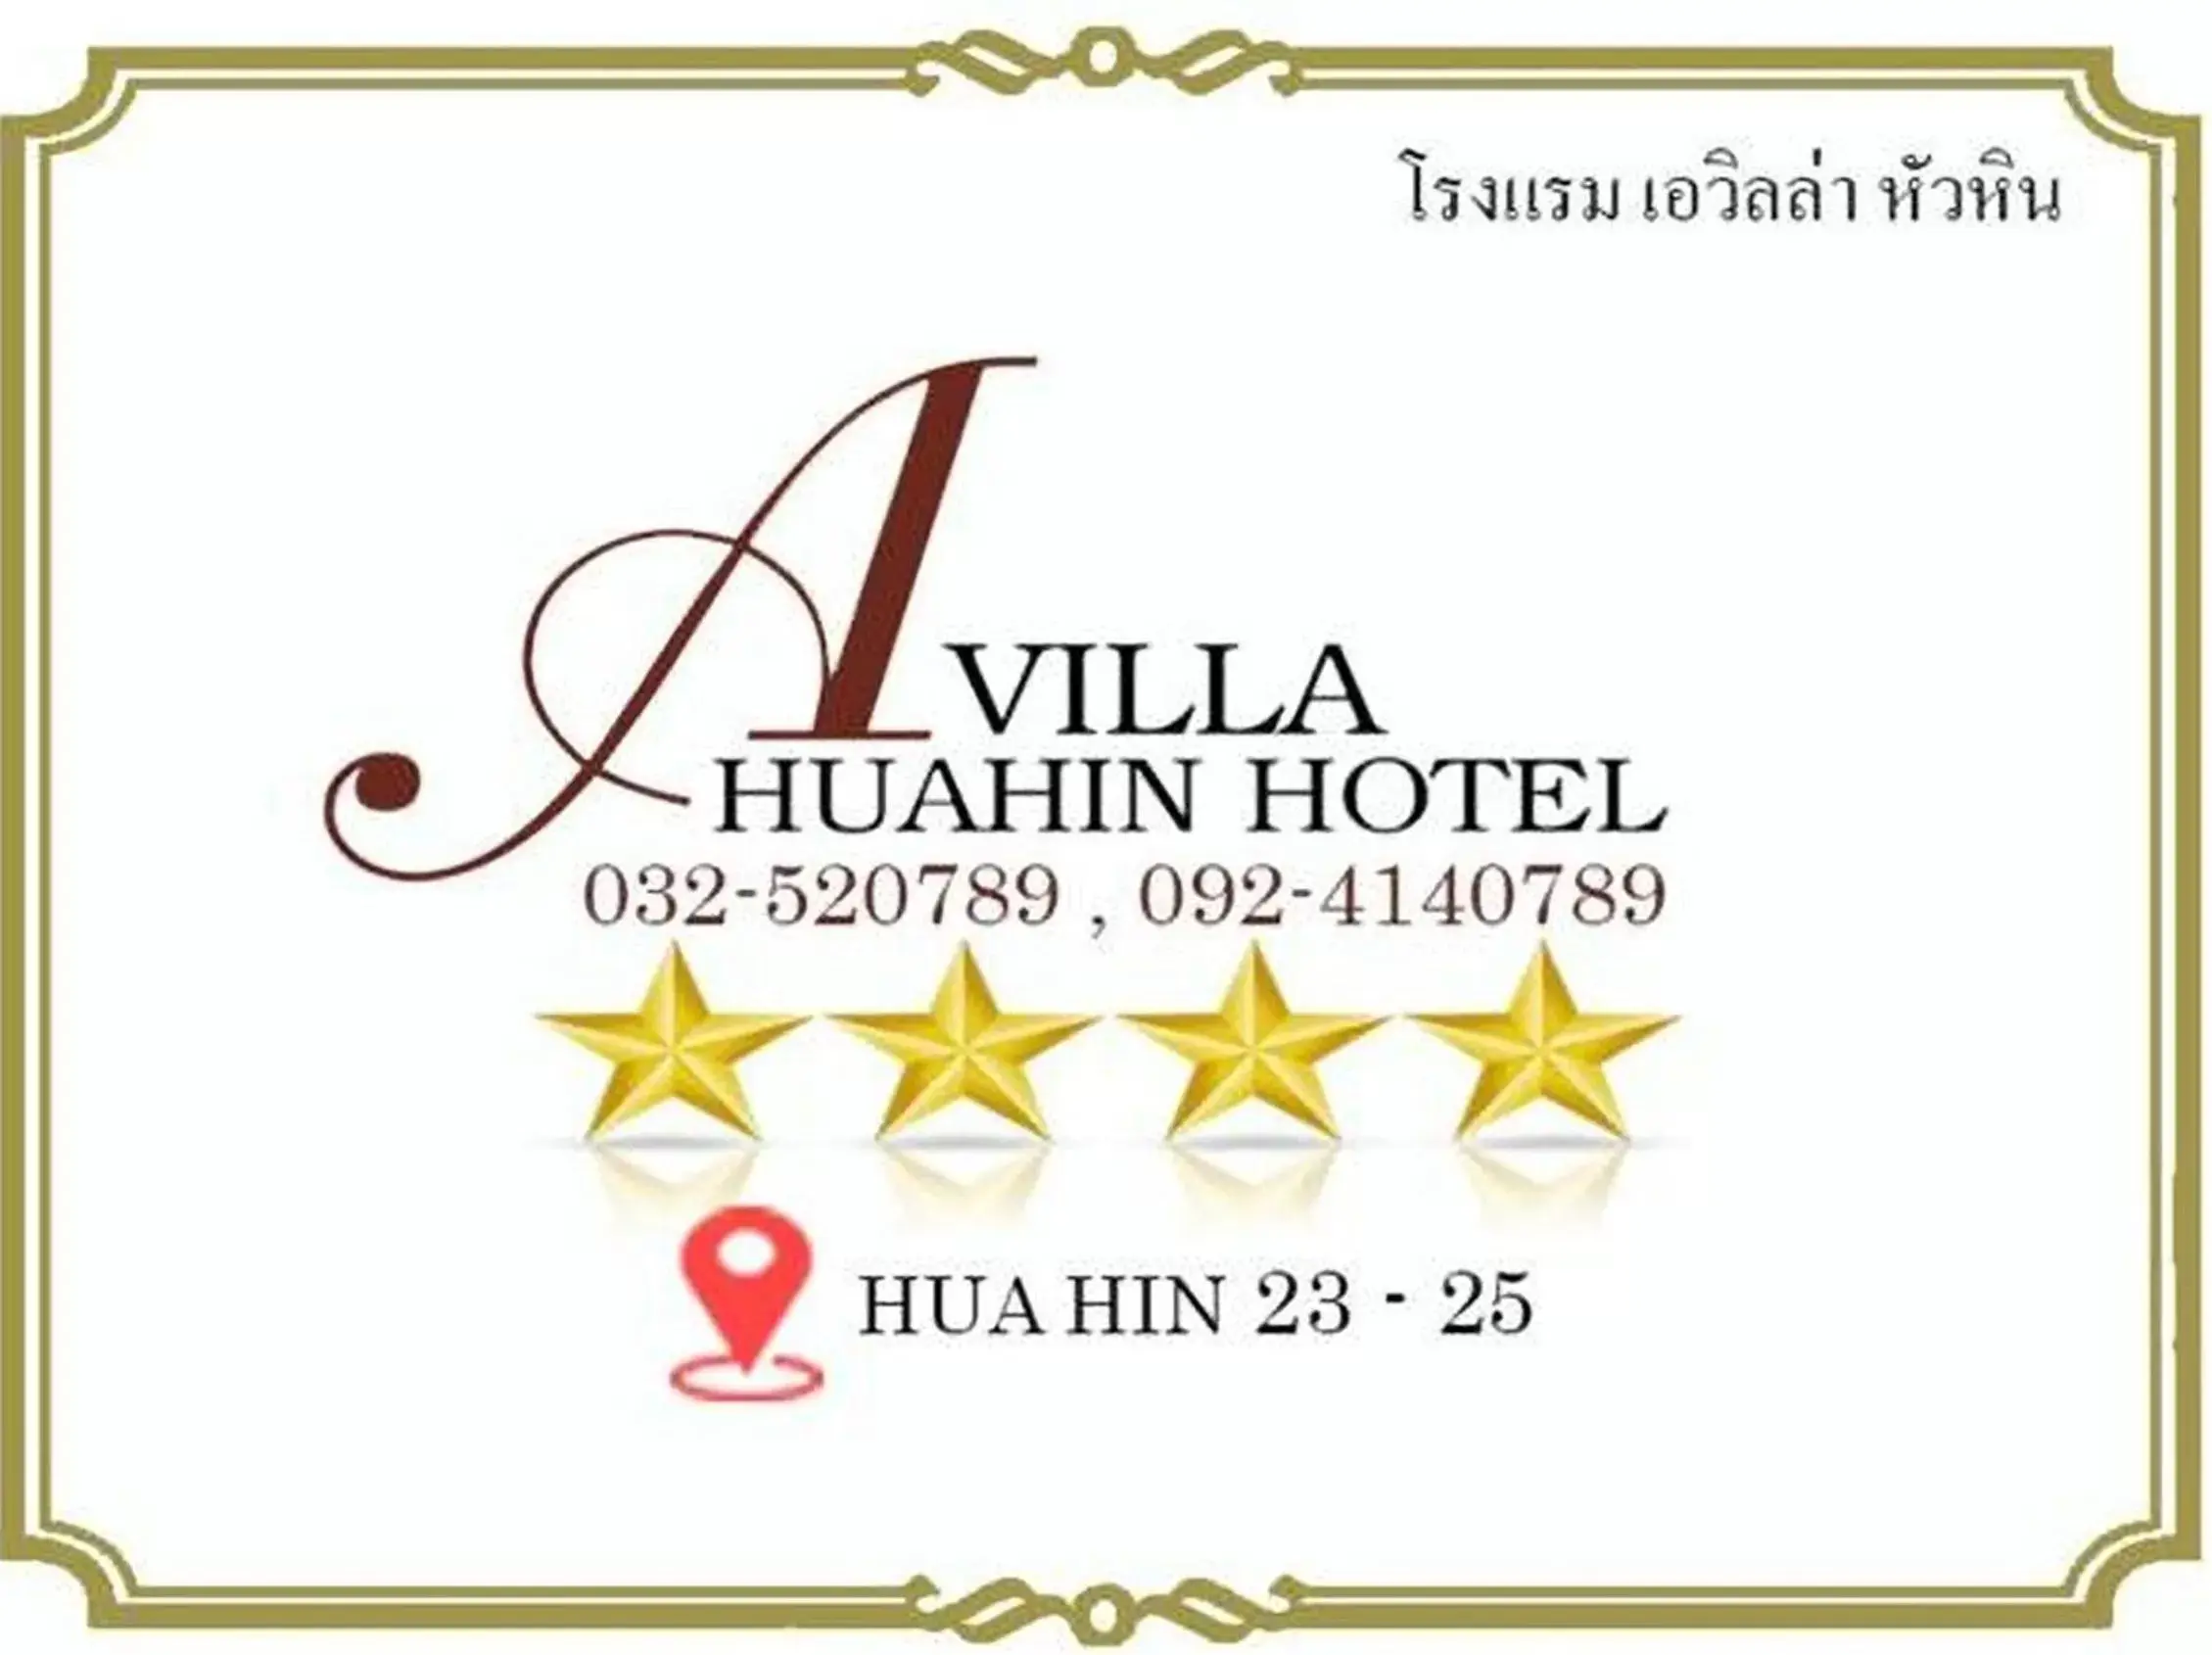 Property logo or sign in A Villa Hua Hin Hotel